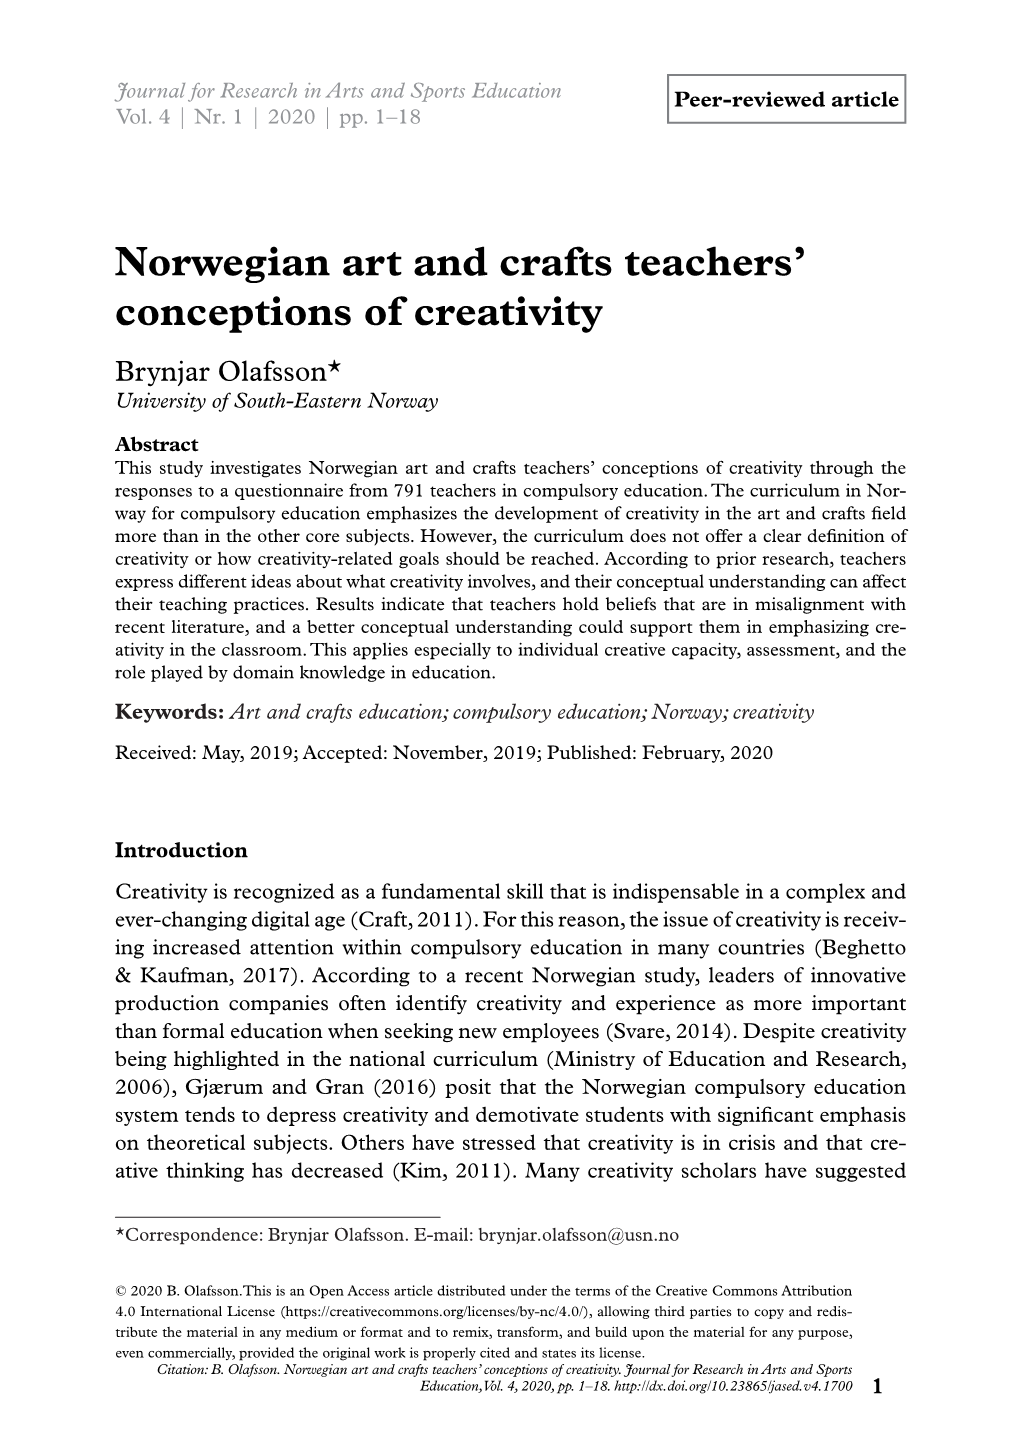 Norwegian Art and Crafts Teachers' Conceptions of Creativity